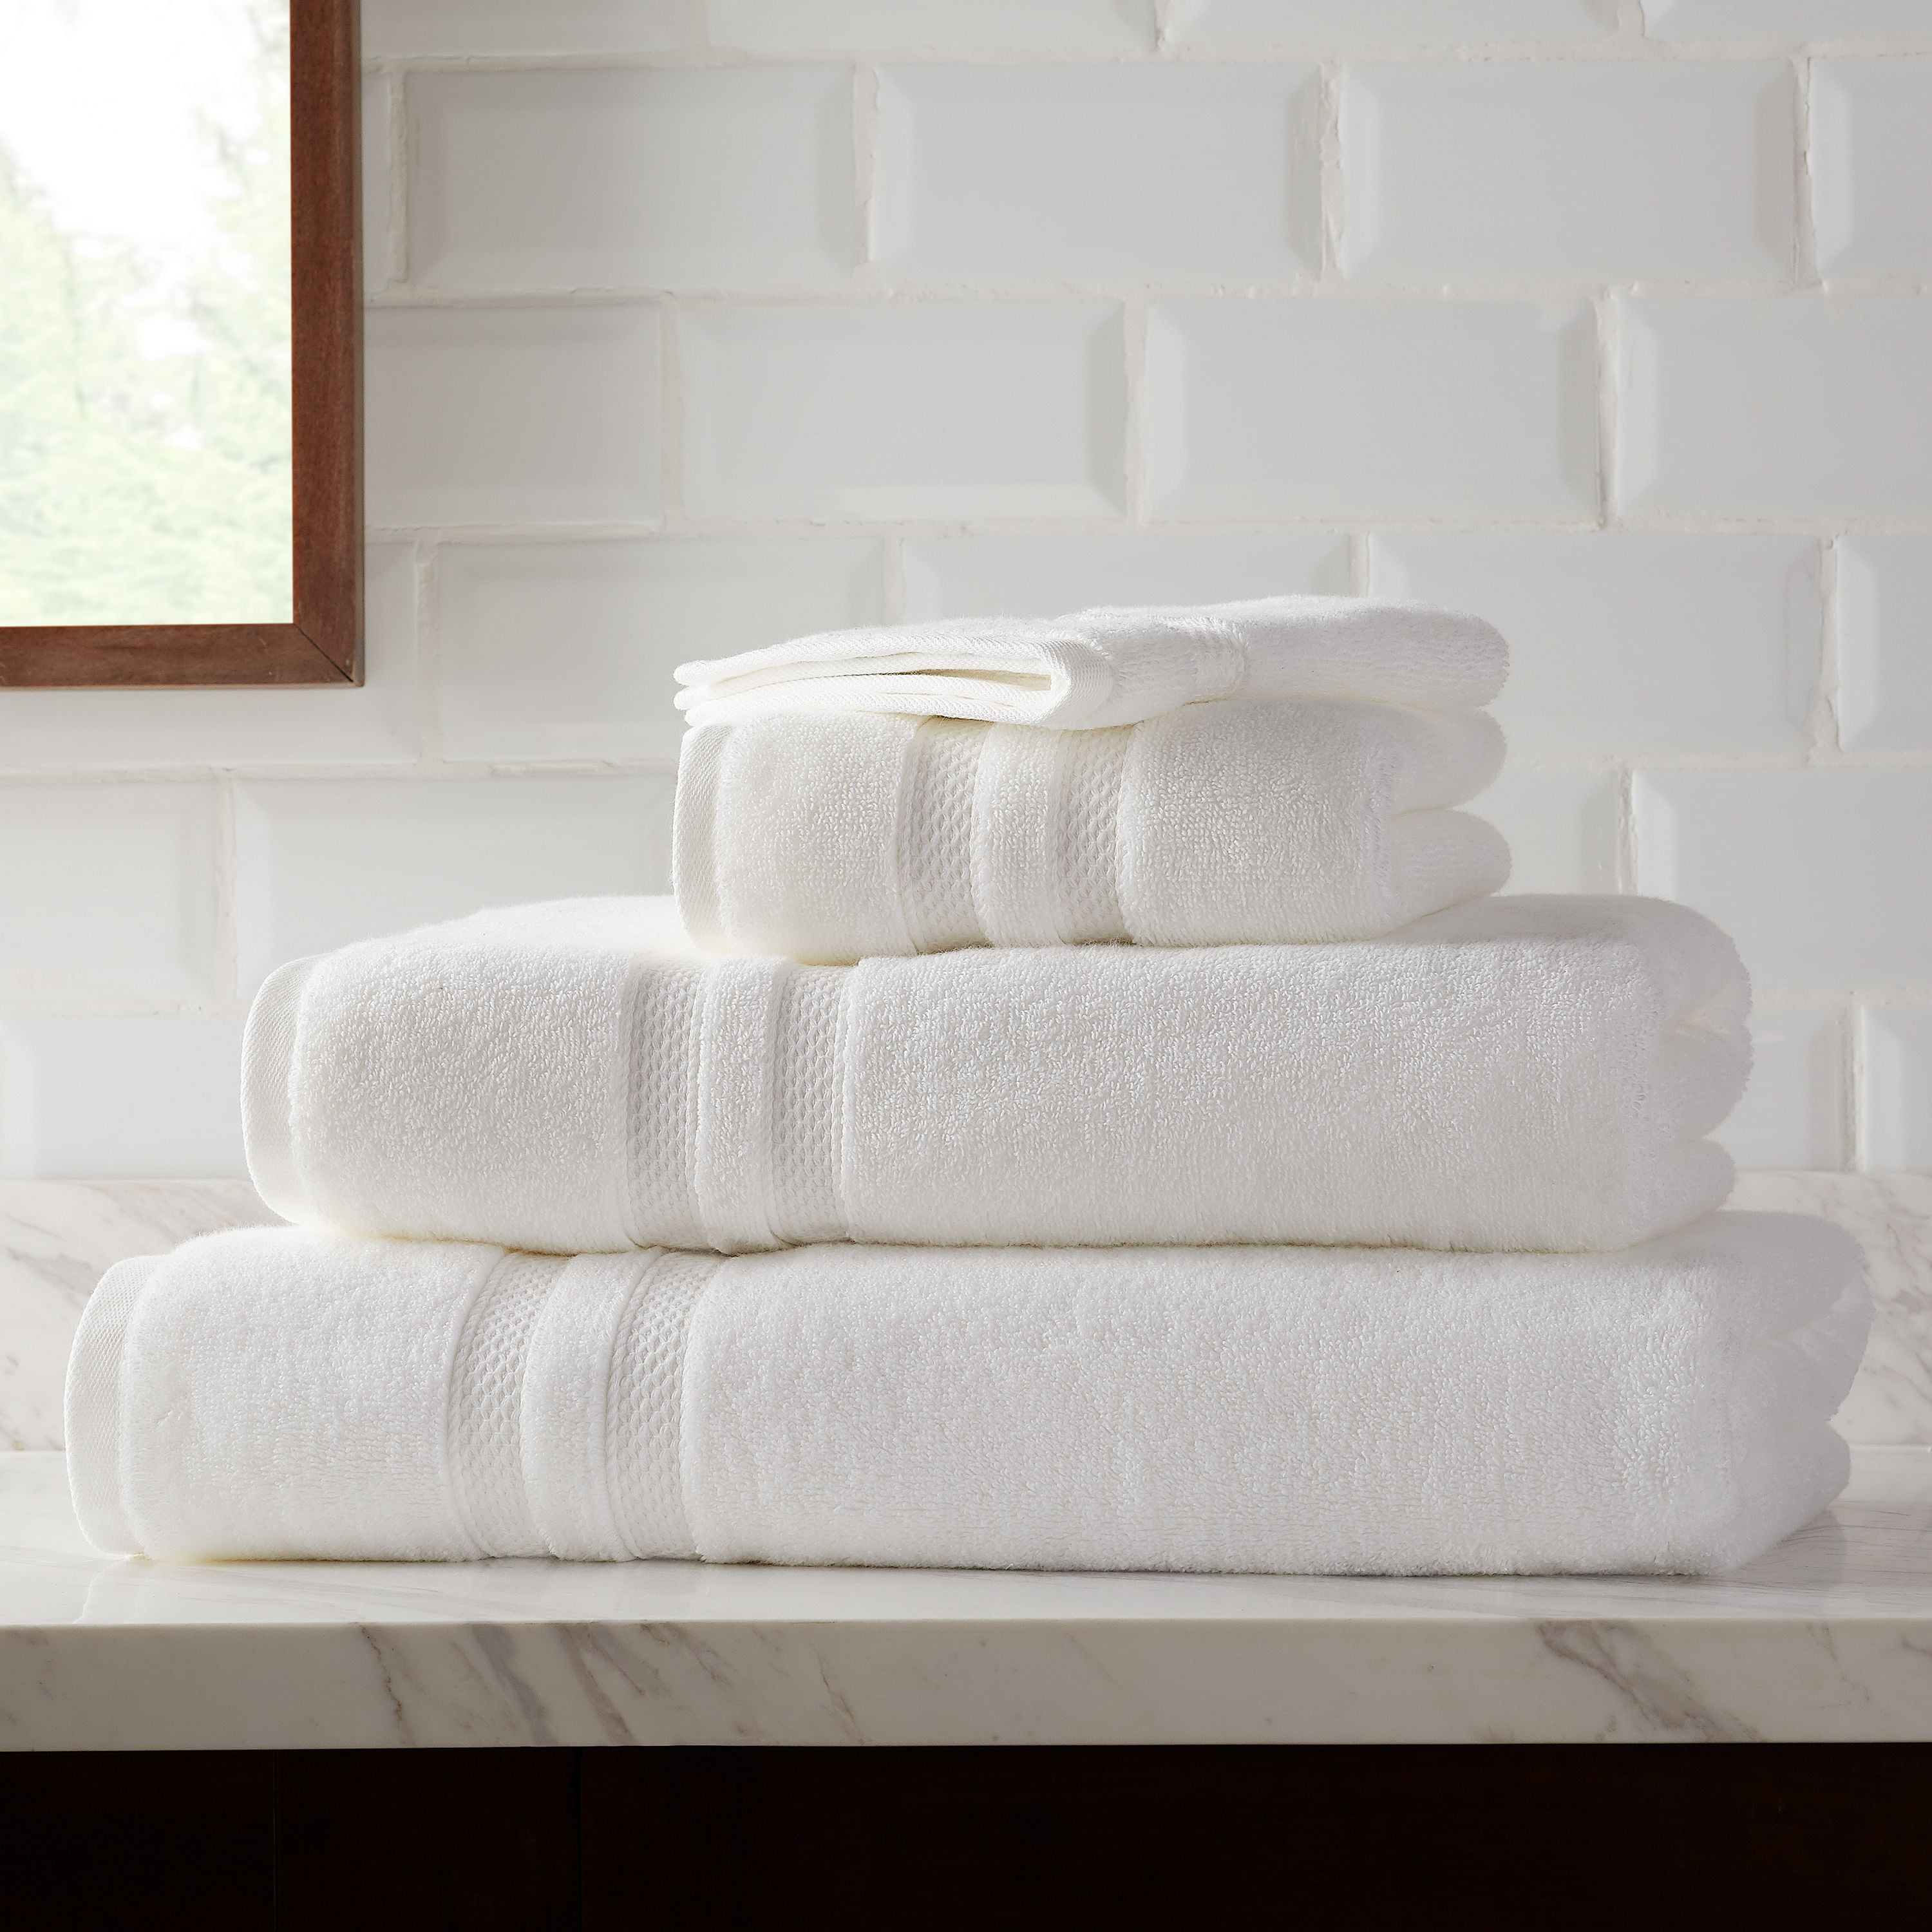 Home Decorators Collection Turkish Cotton Ultra Soft White Bath Sheet